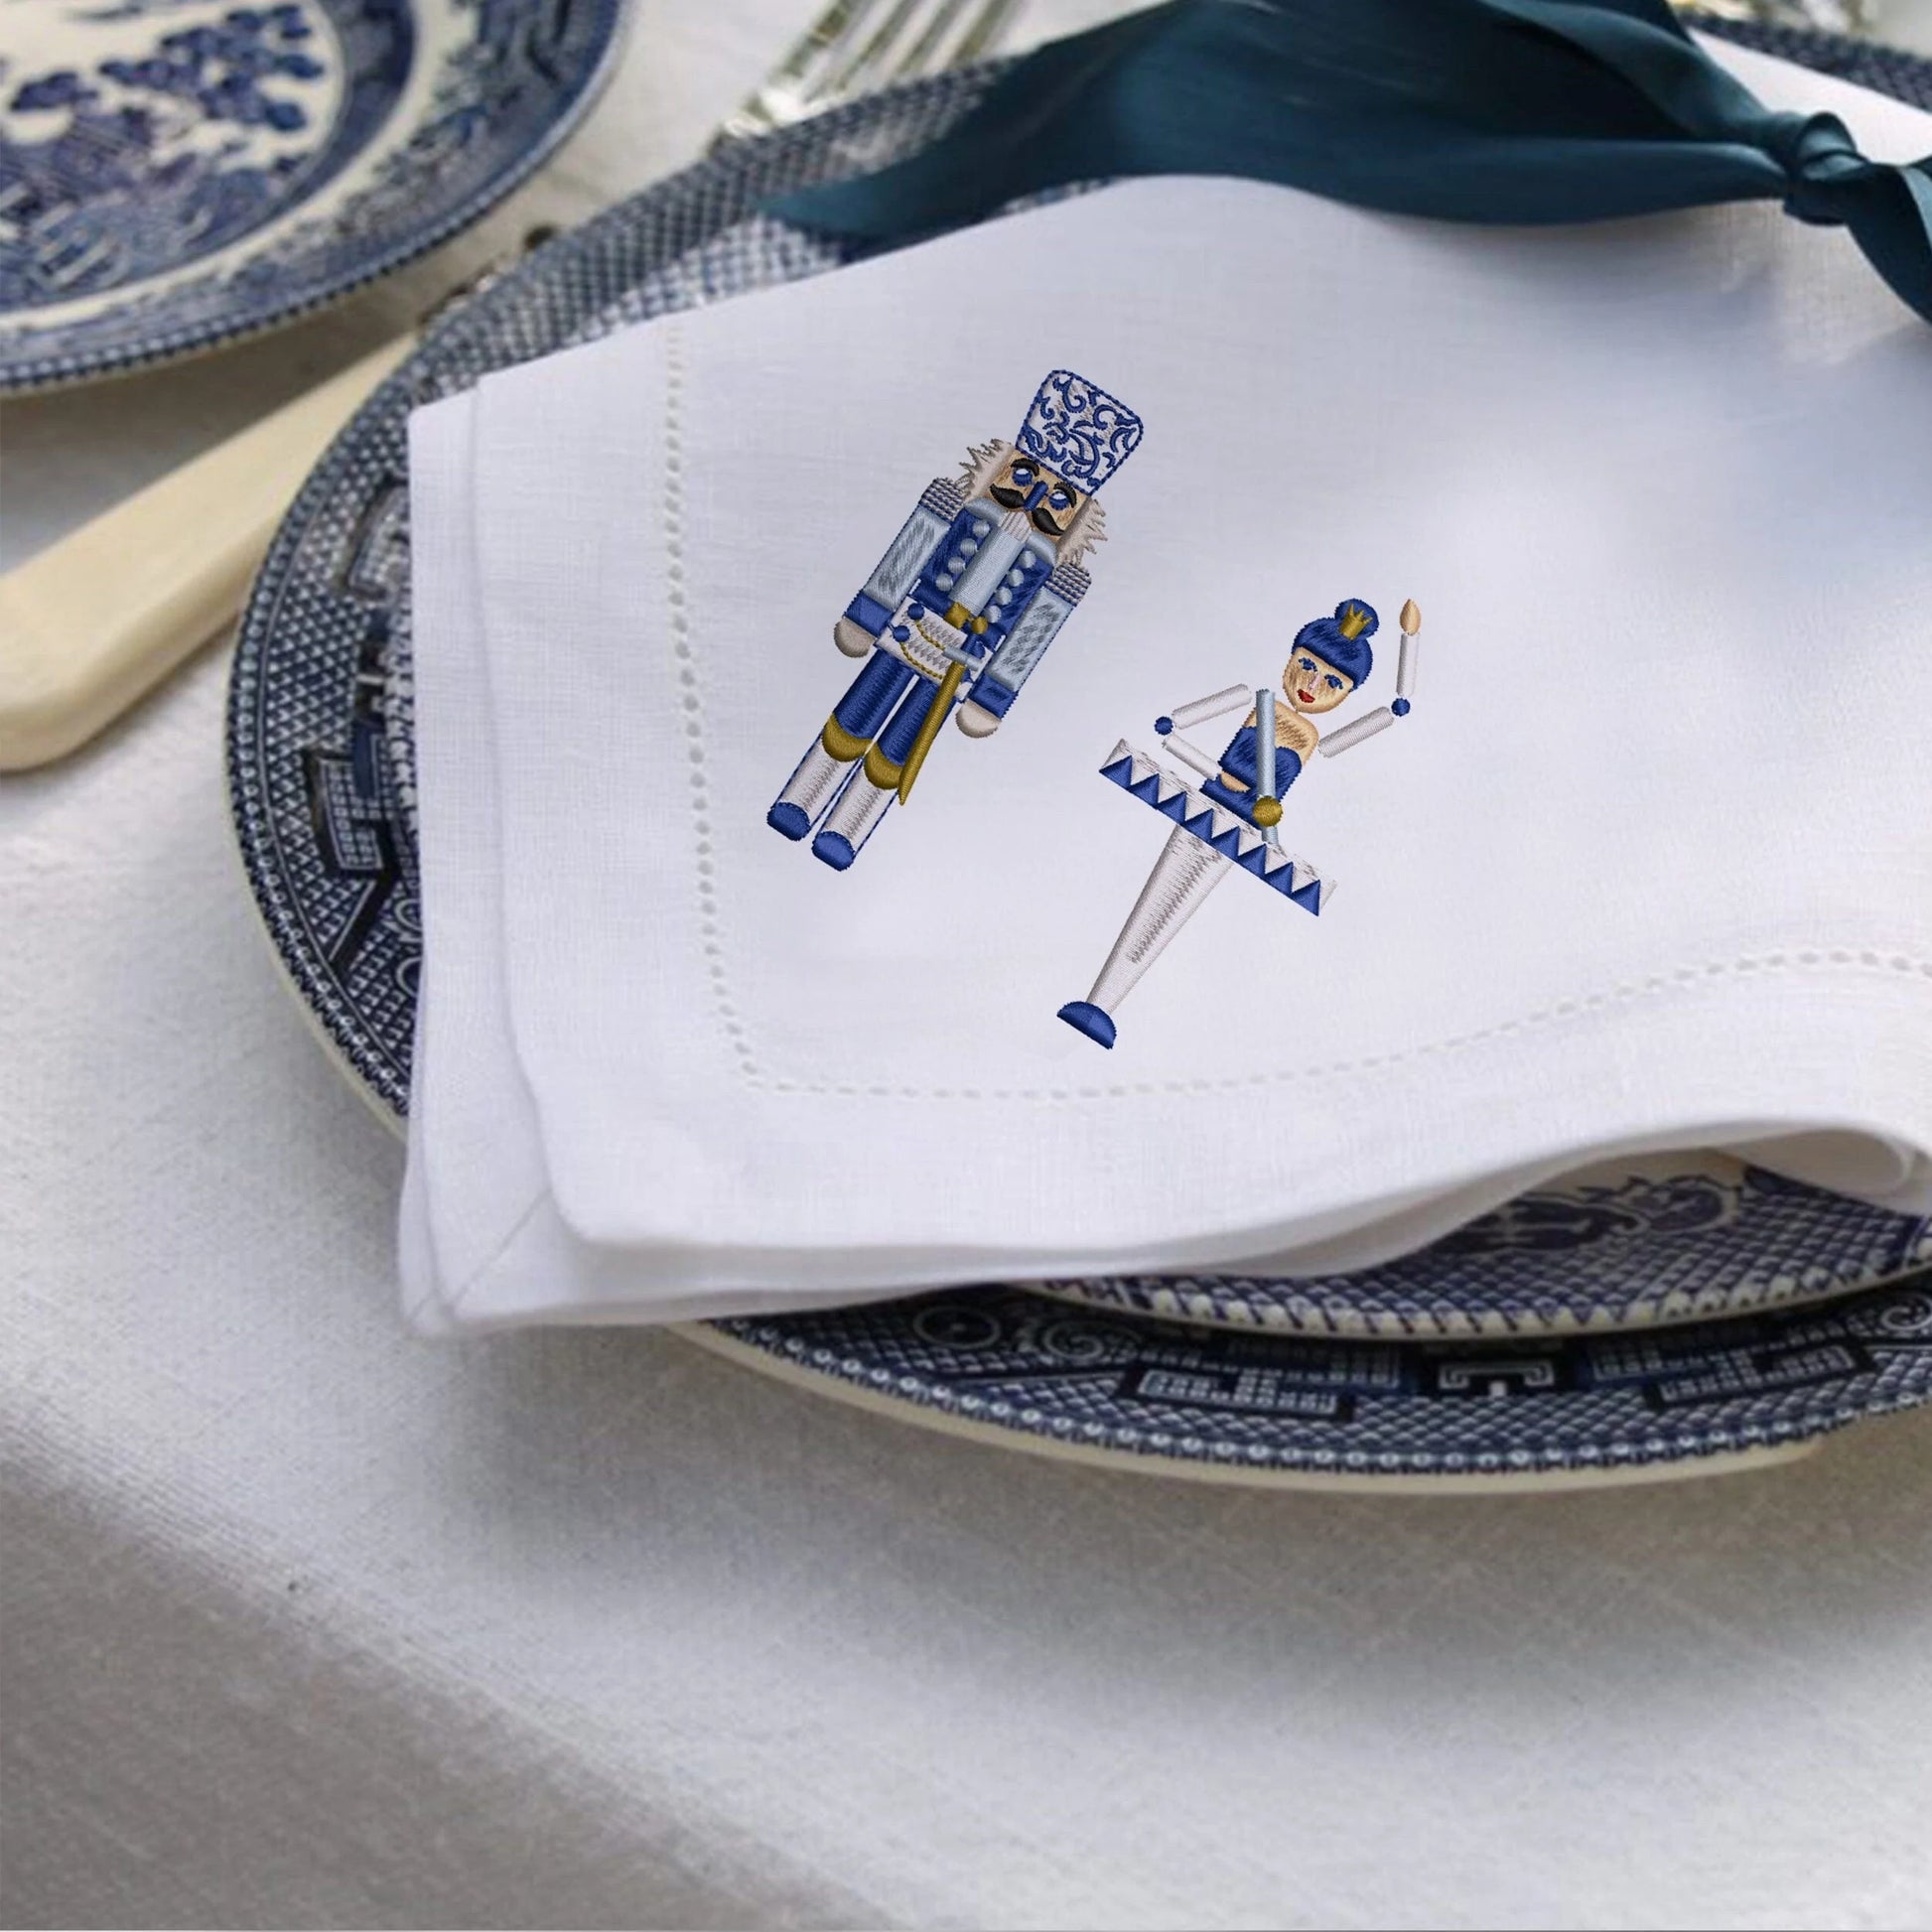 Christmas Nutcracker and Ballerina machine embroidery design set on Chinoiserie style napkin